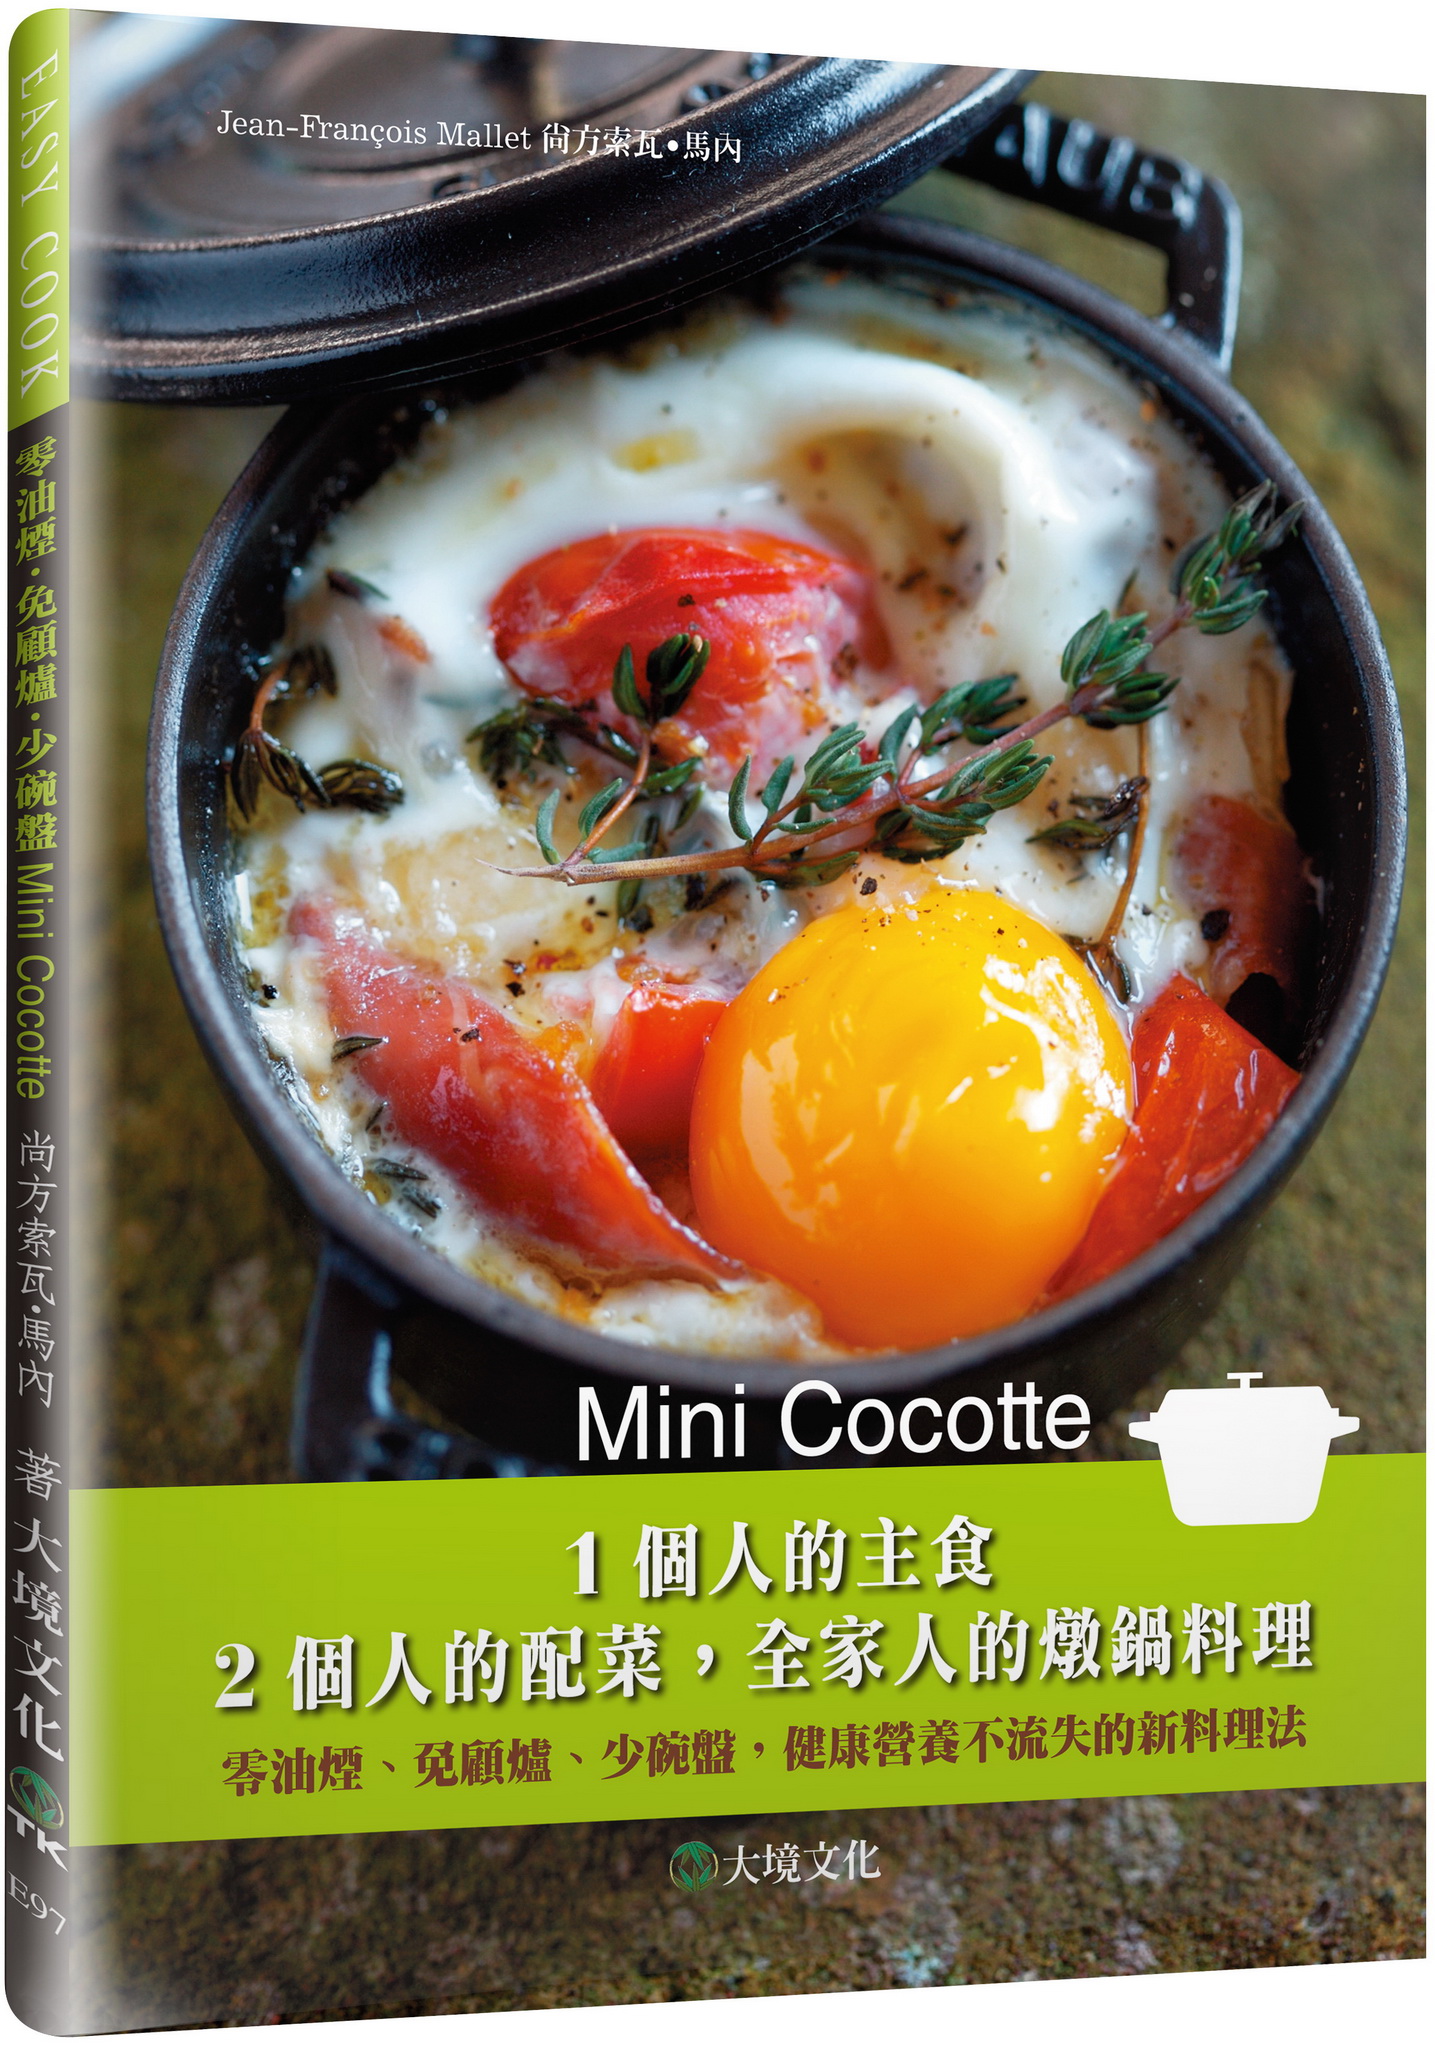 Mini Cocotte 1個人的主食，2個人的配菜，全家人的燉鍋料理：零油煙、免顧爐、少碗盤，健康營養不流失的新料理法